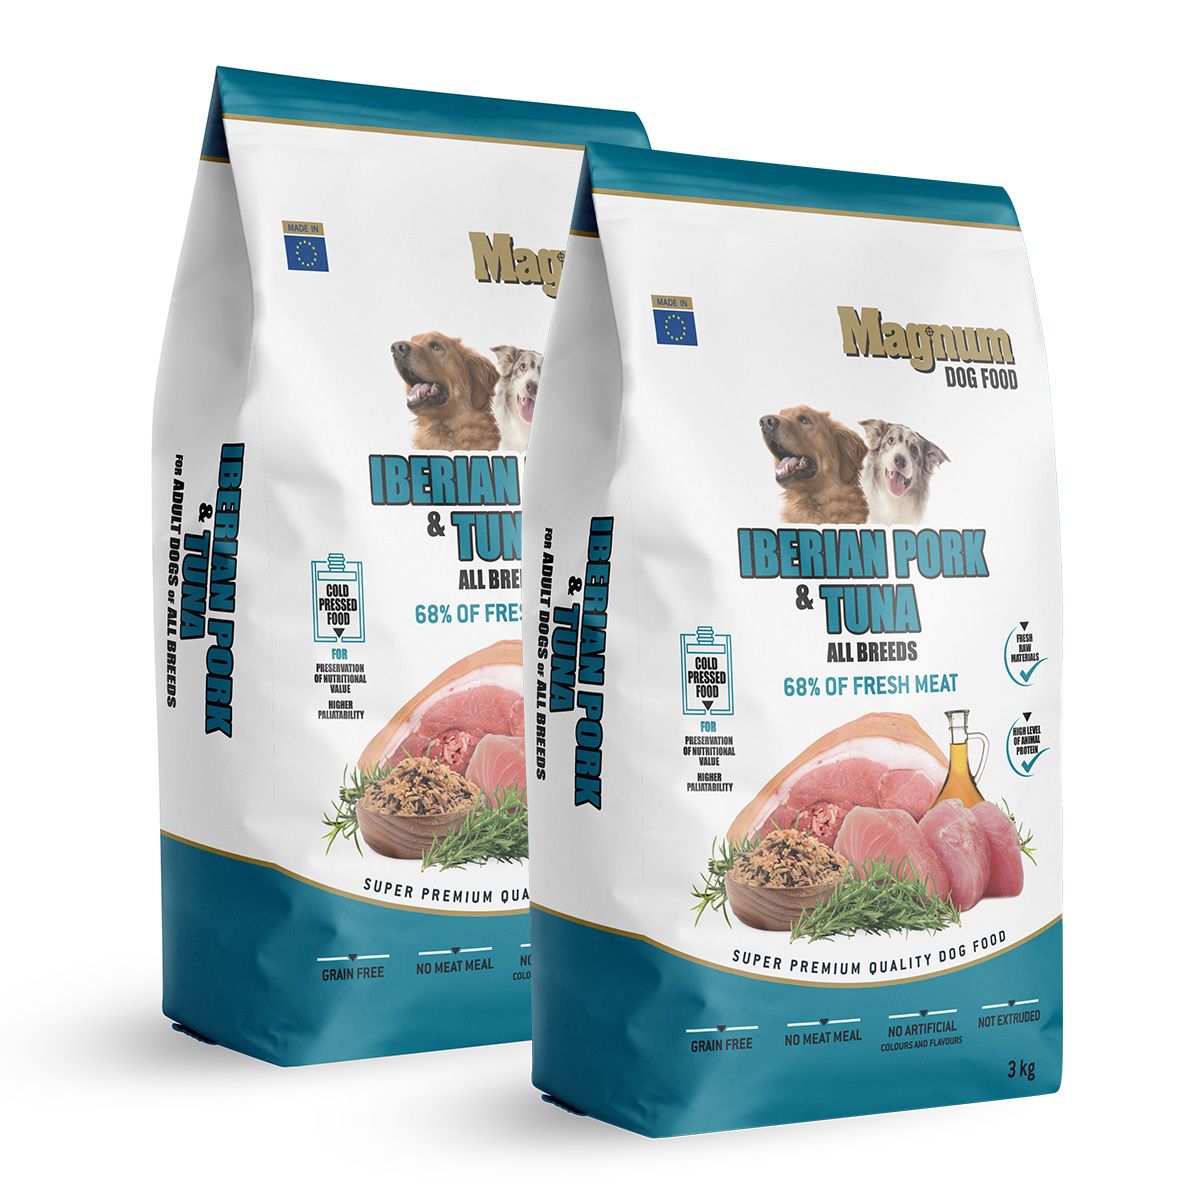 Magnum Iberian Pork & Tuna All Breed 2x3kg Magnum dog food